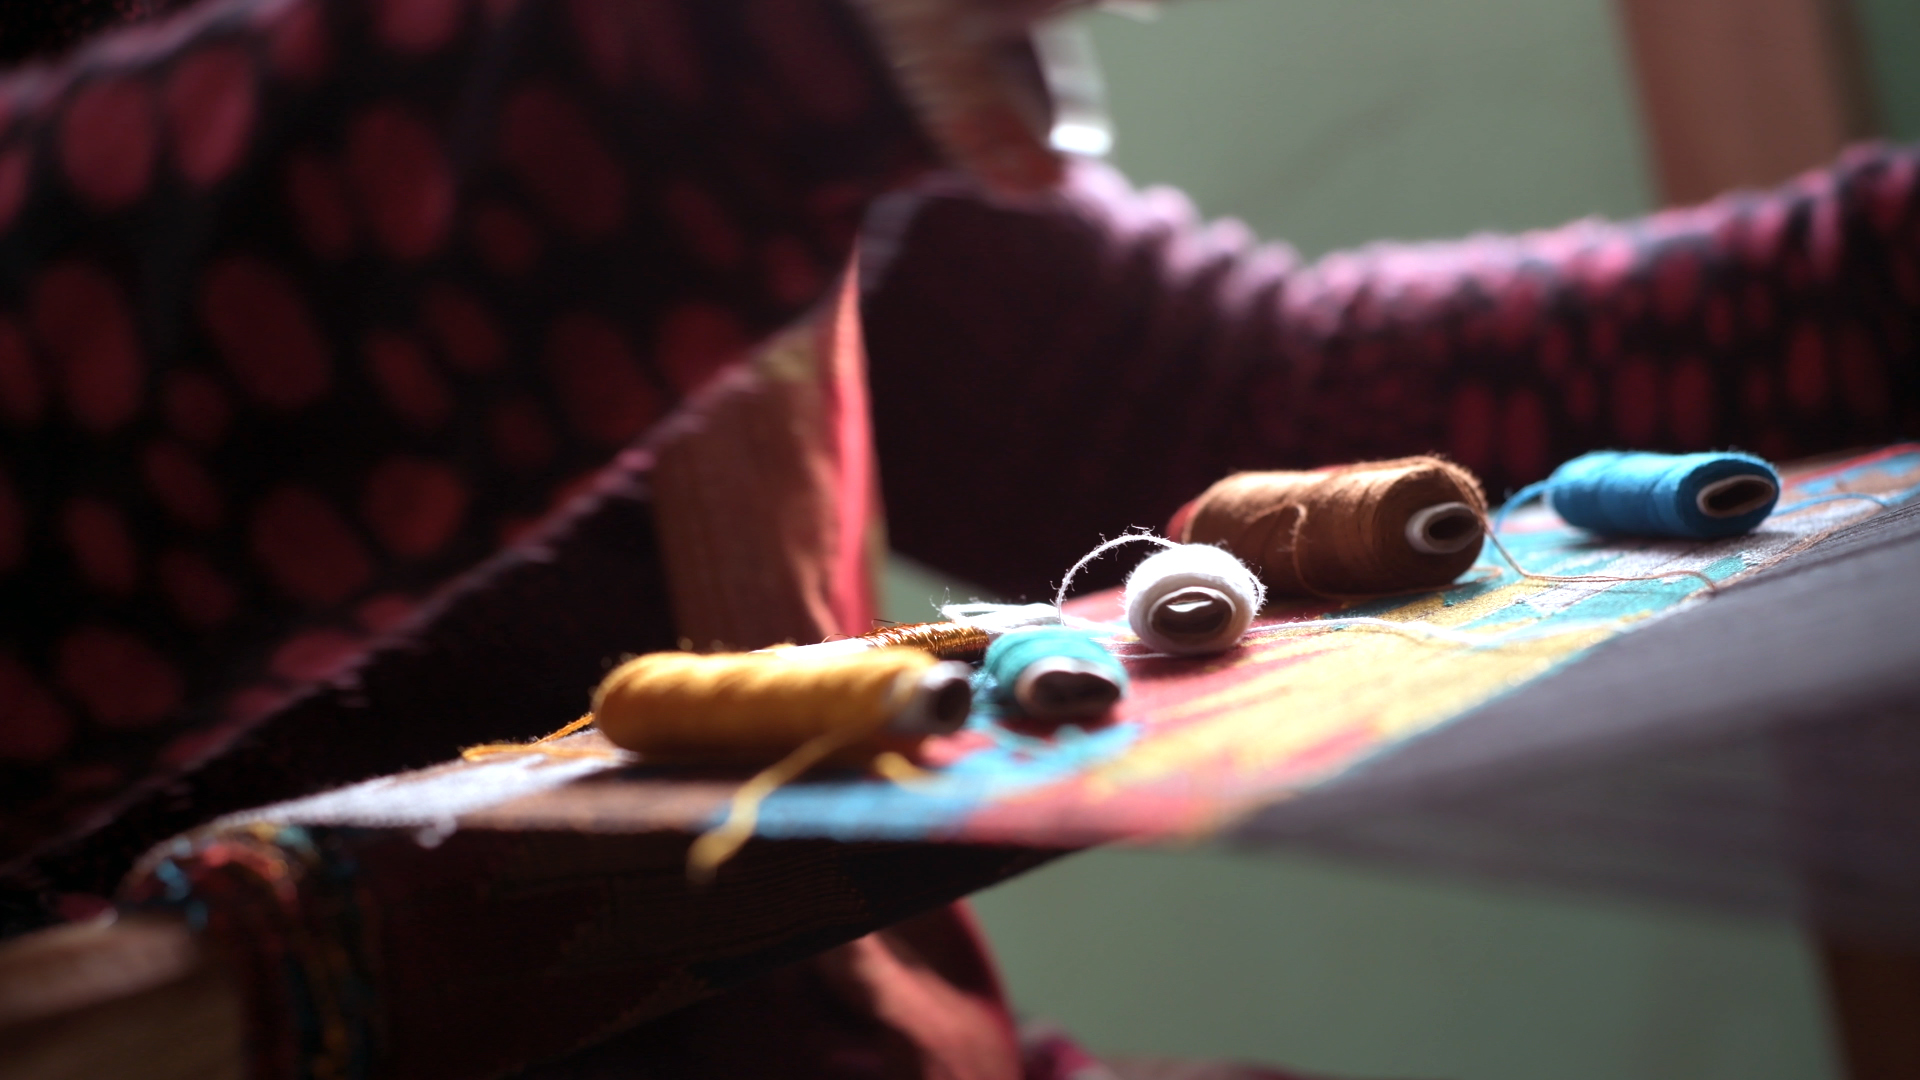 Dhaka sewing and weaving training